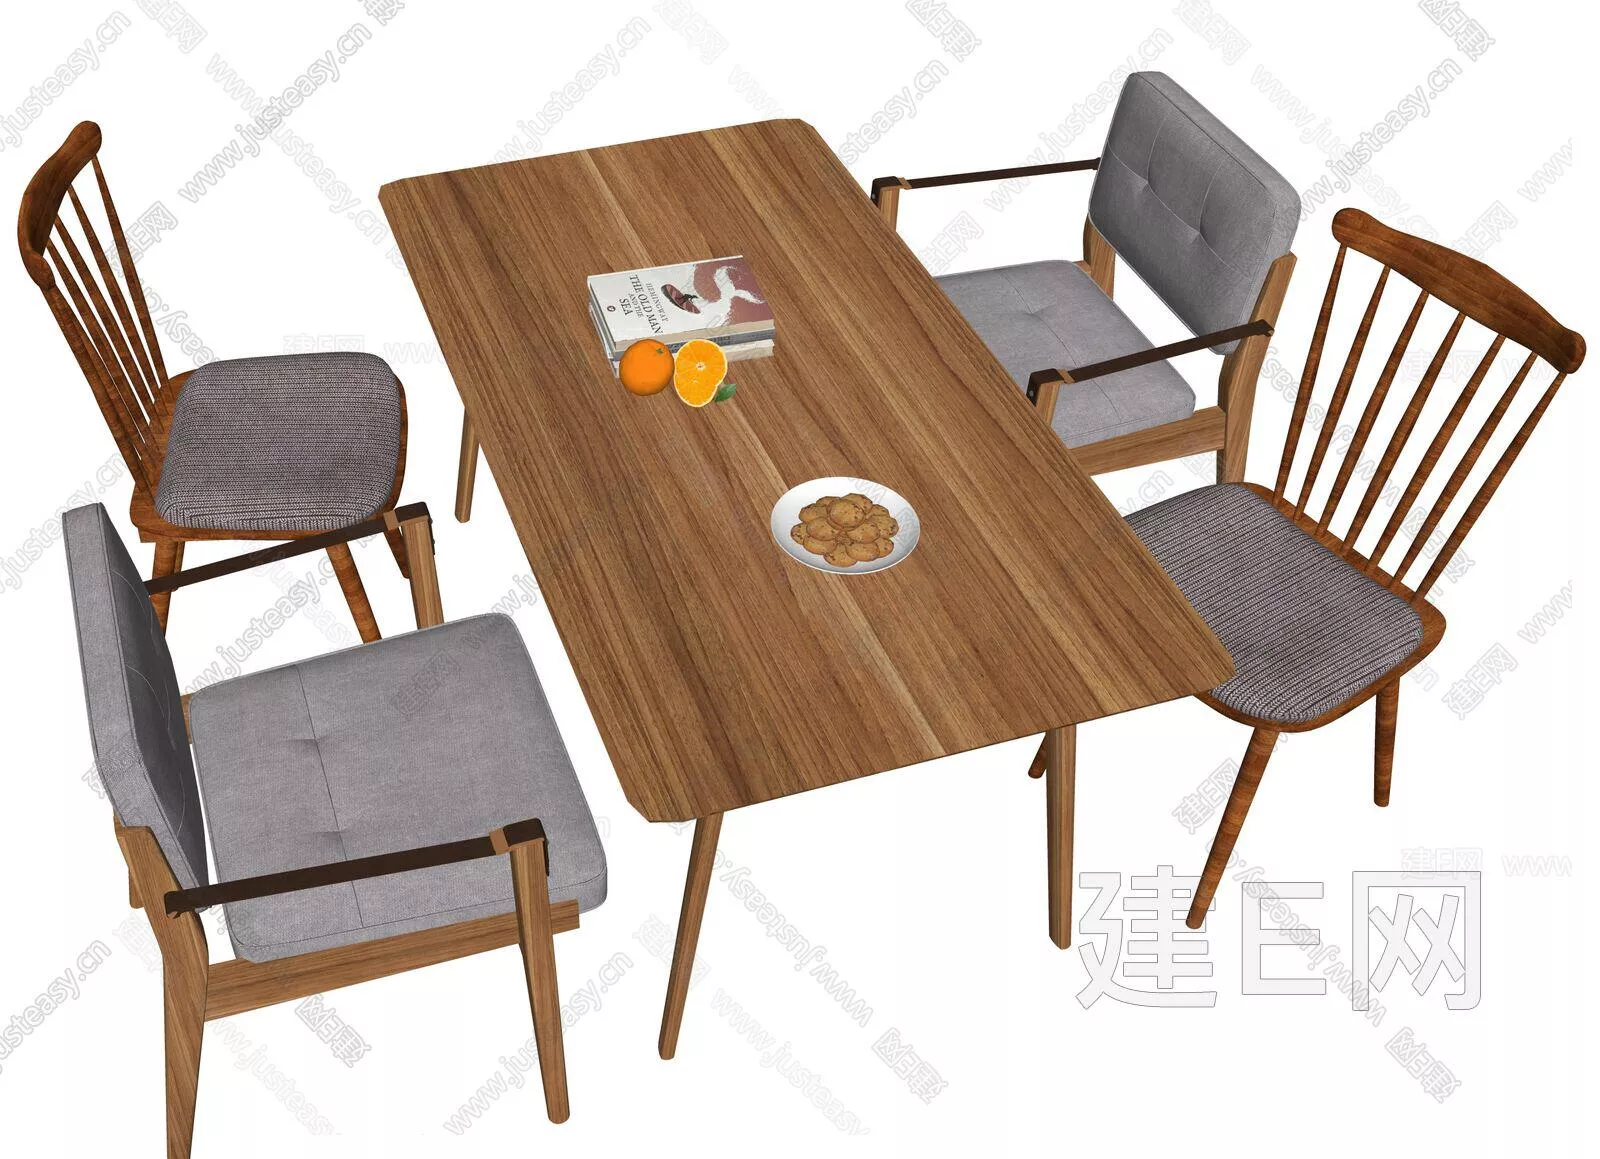 NORDIC DINING TABLE SET - SKETCHUP 3D MODEL - ENSCAPE - 111886670